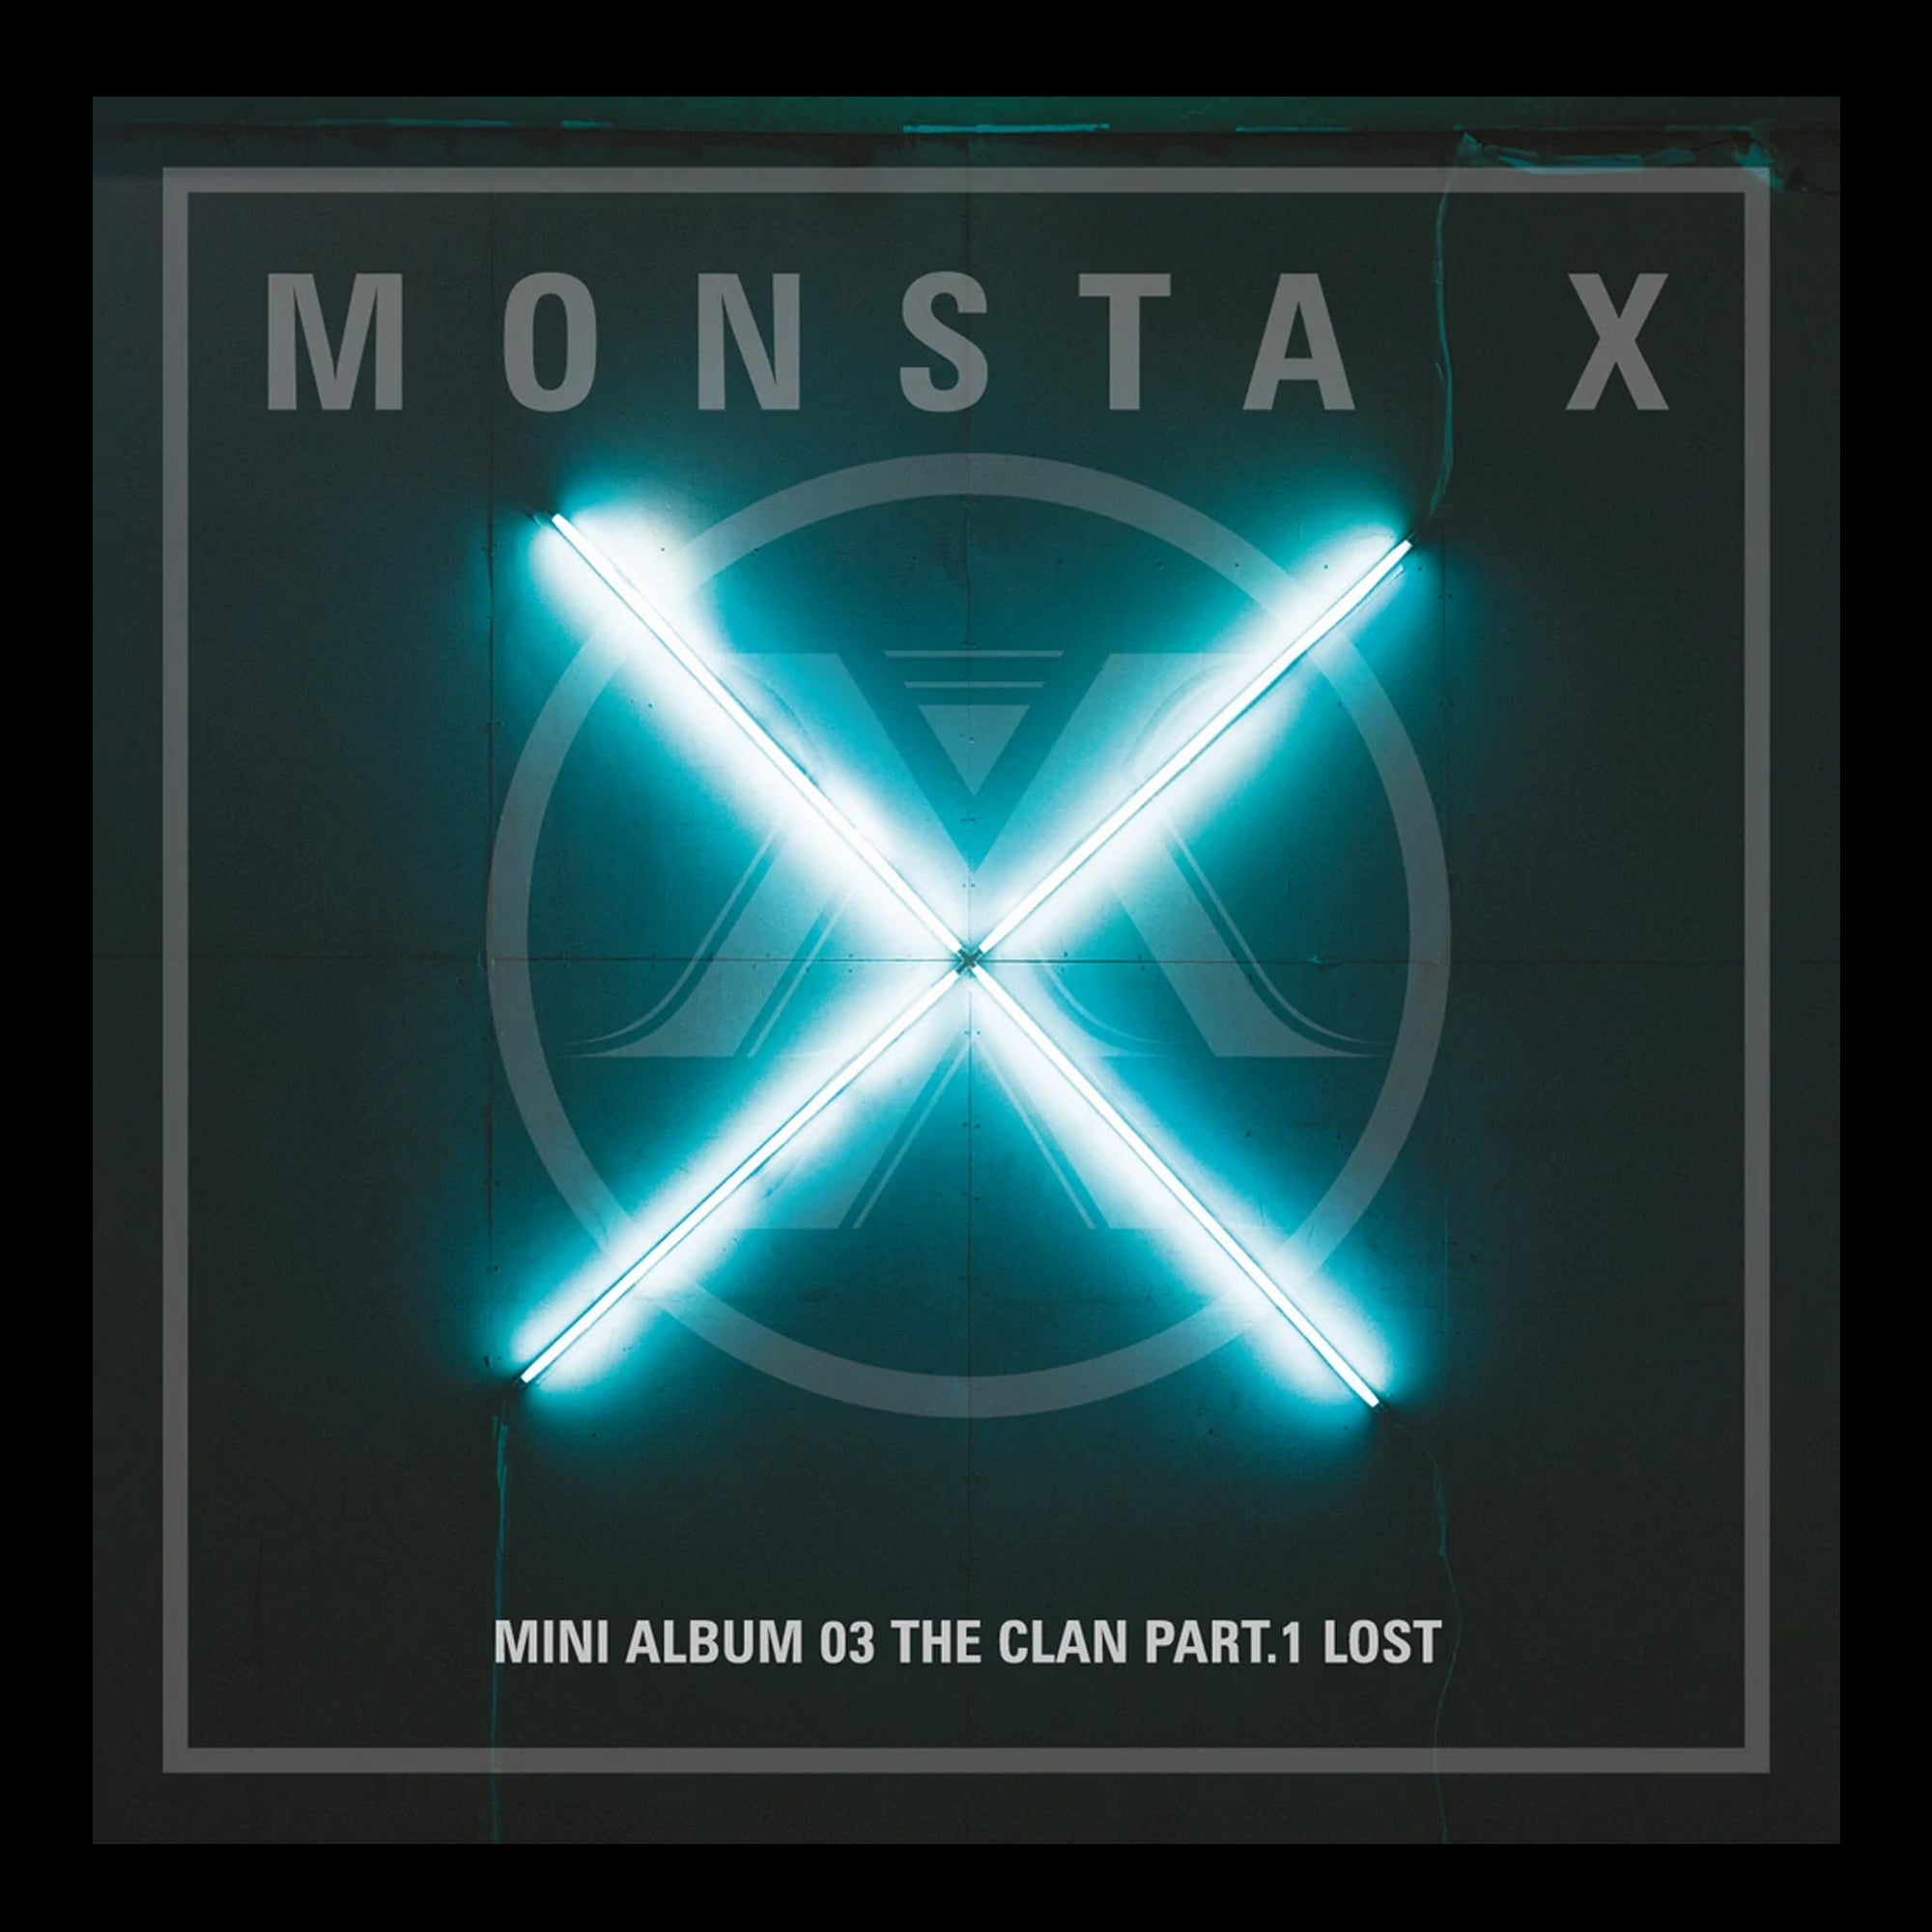 MONSTA X - THE CLAN 2.5 PART.1 LOST